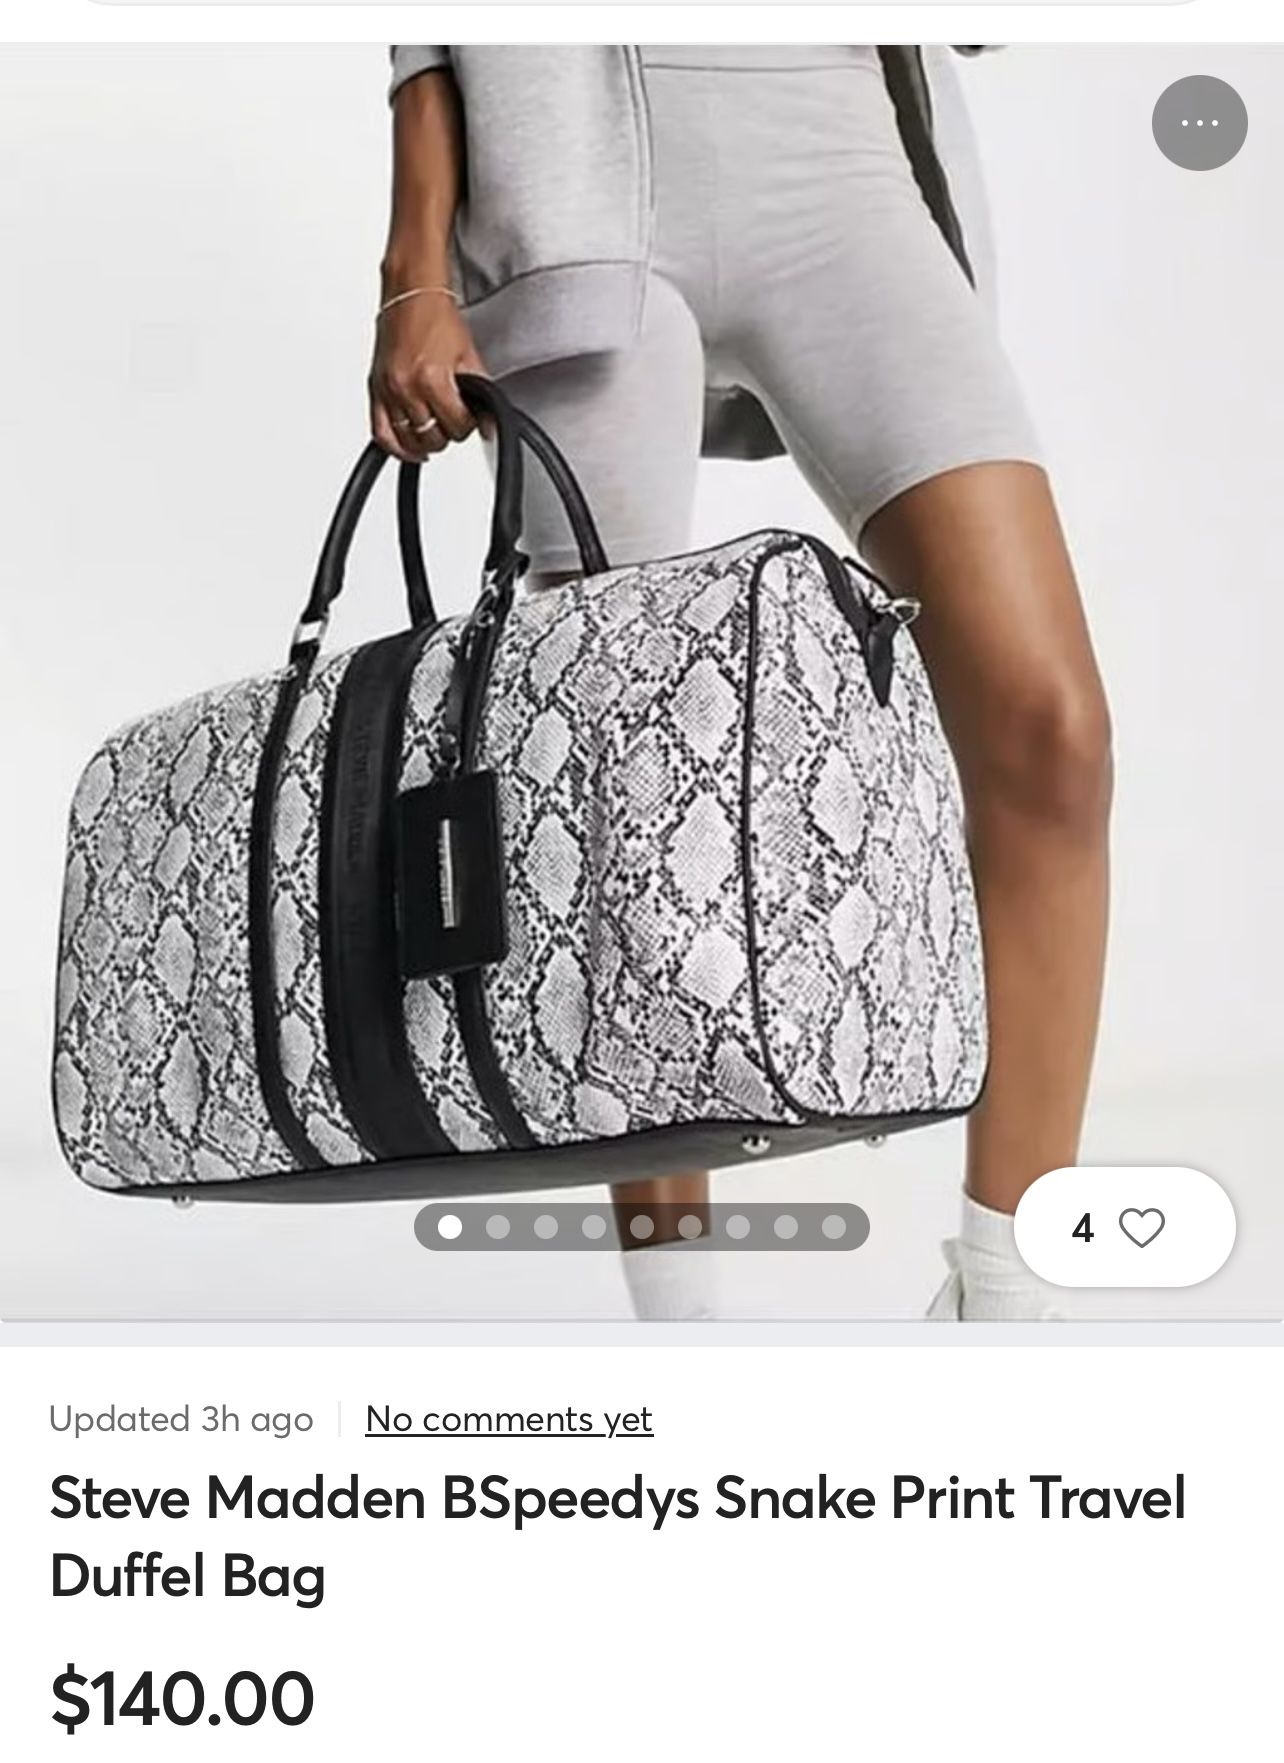 Steve Madden Weekender Travel Bag